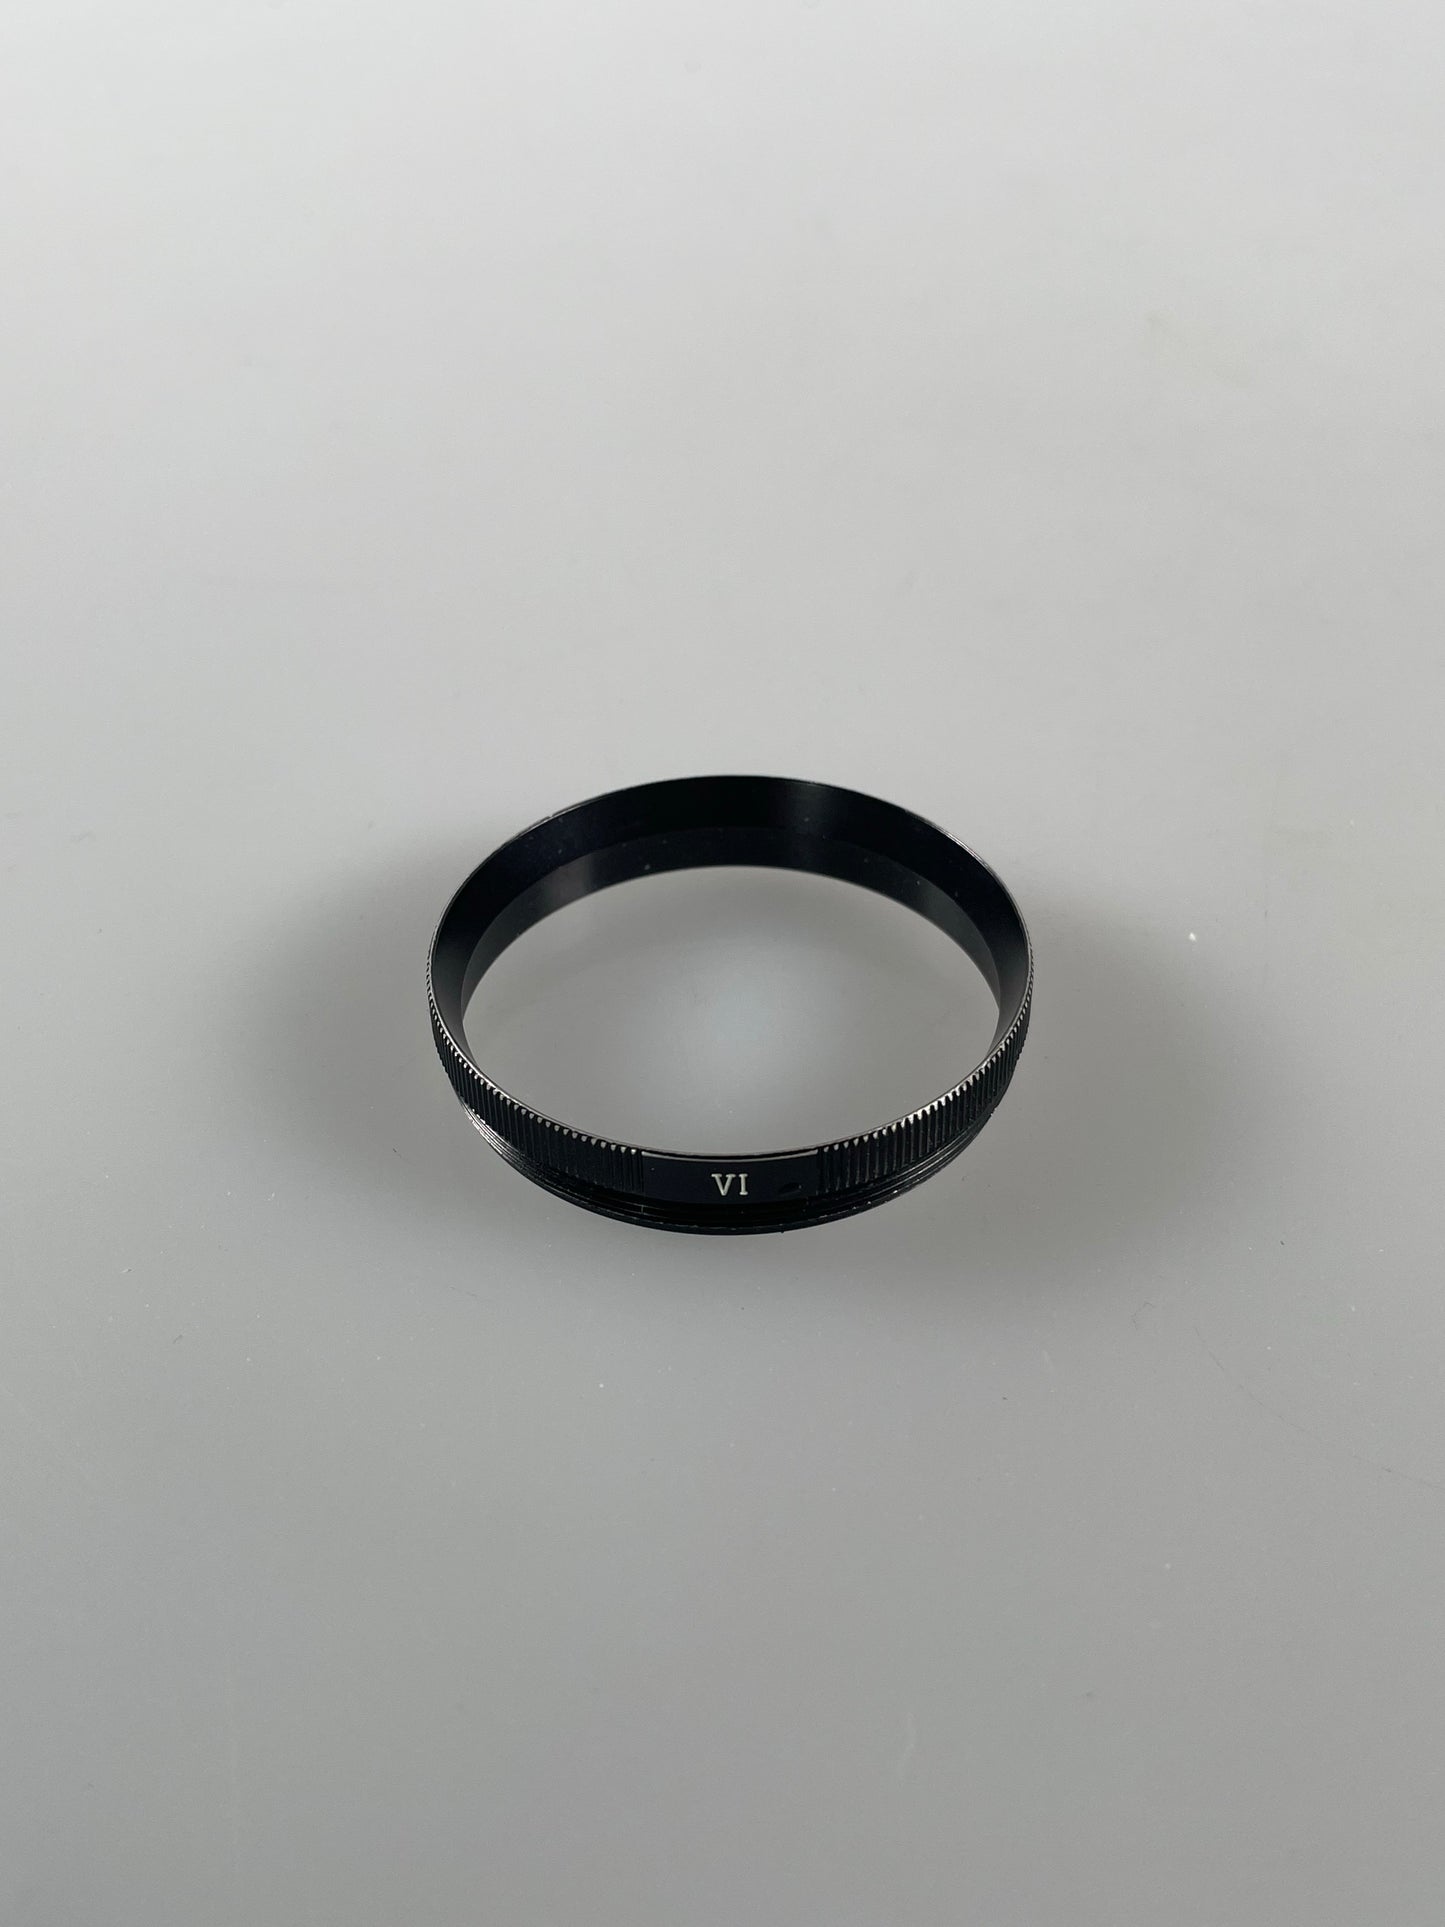 Leica Leitz 14160 14160U Series VI Adapter Ring